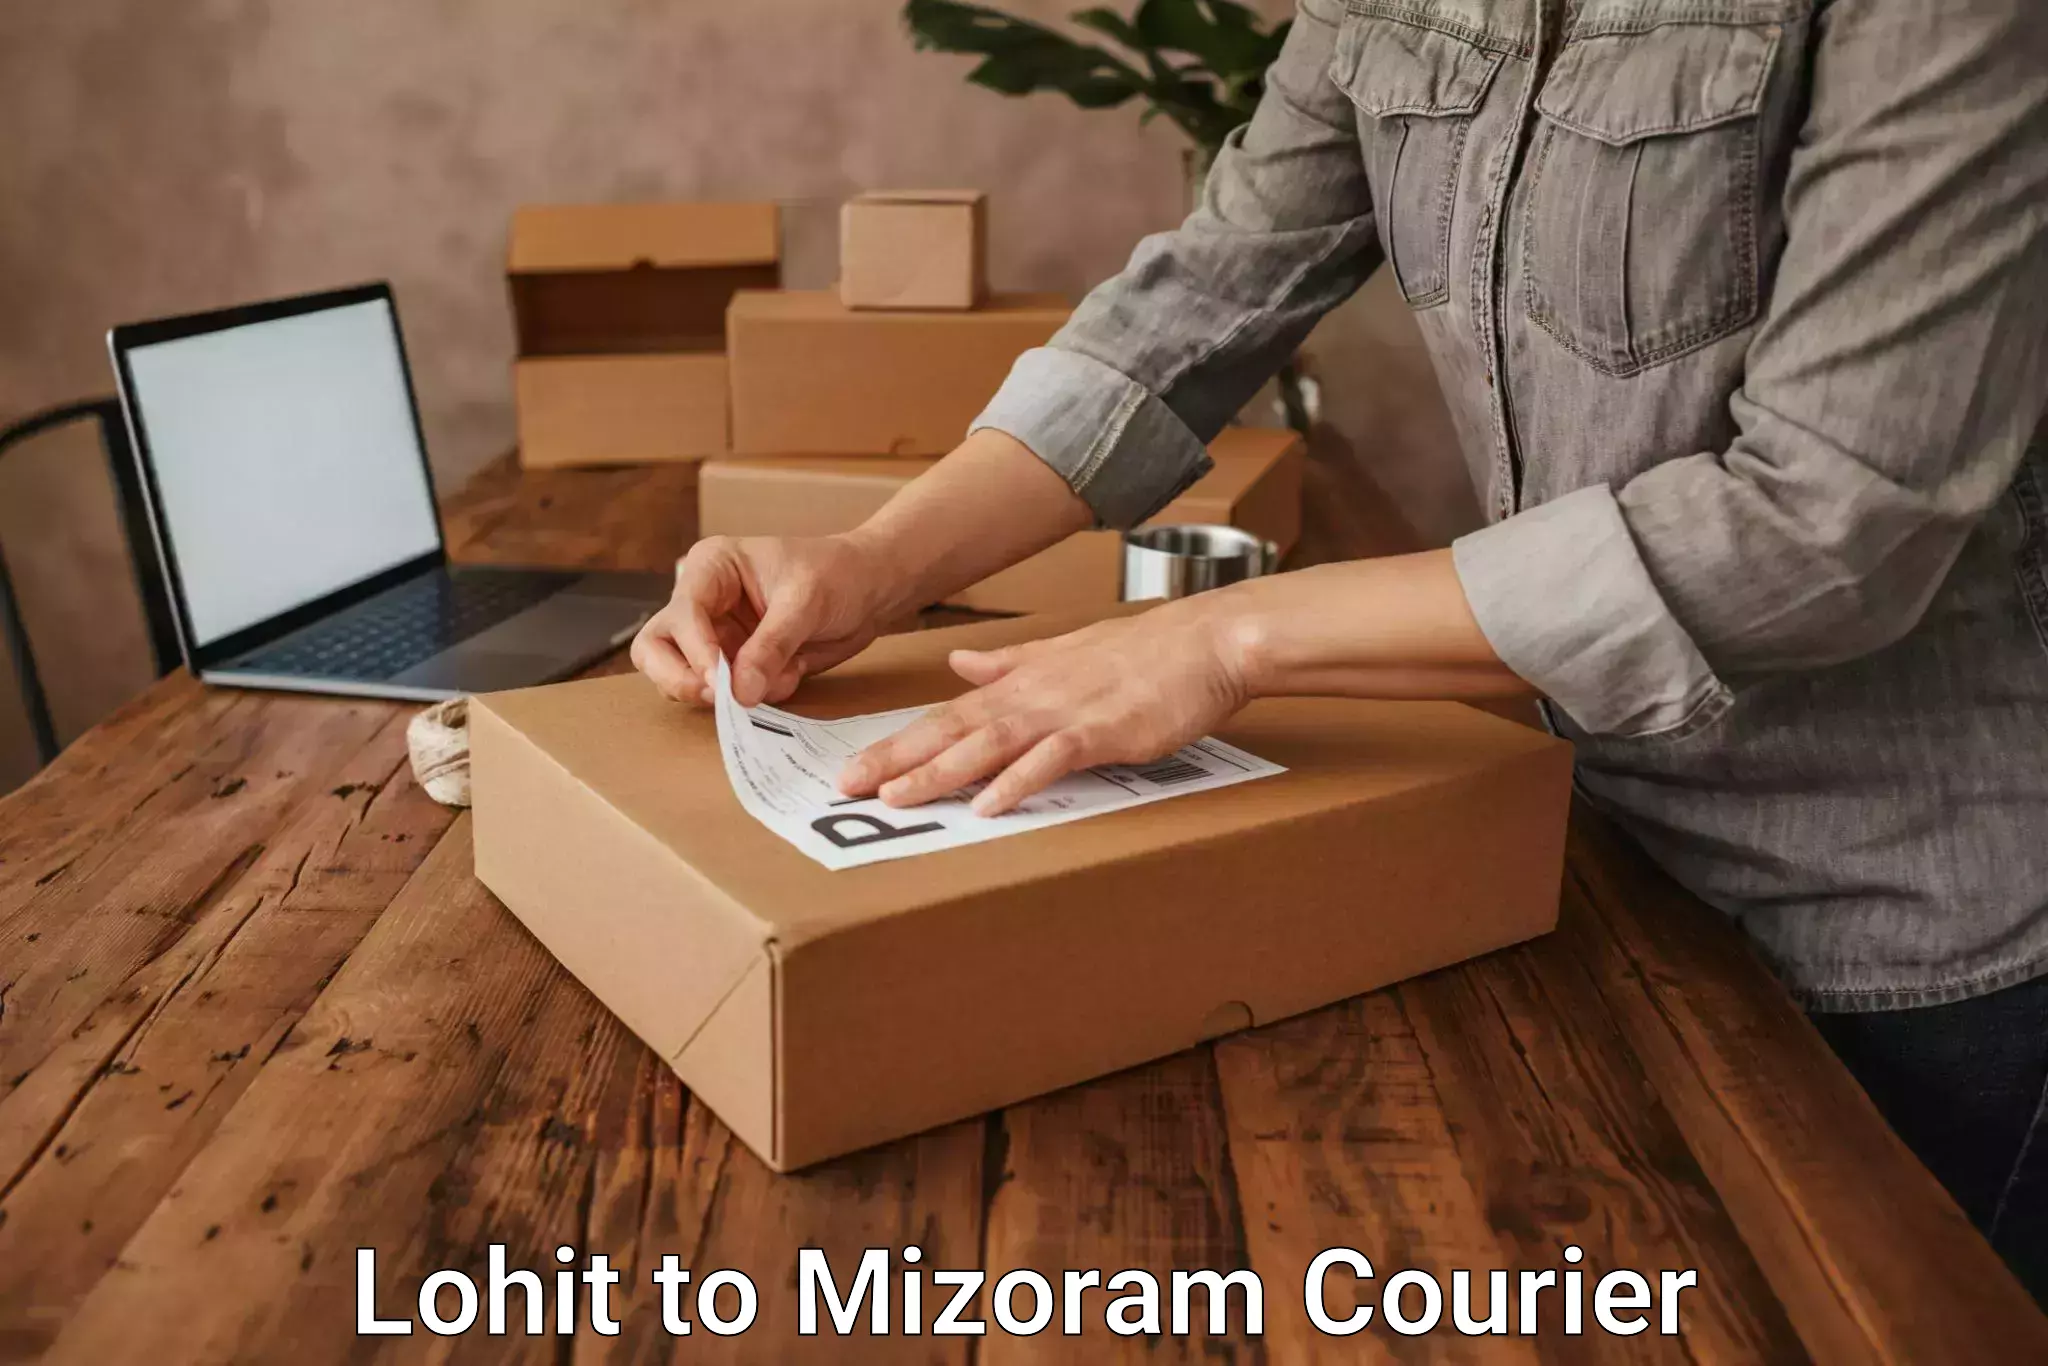 Courier service comparison Lohit to Aizawl